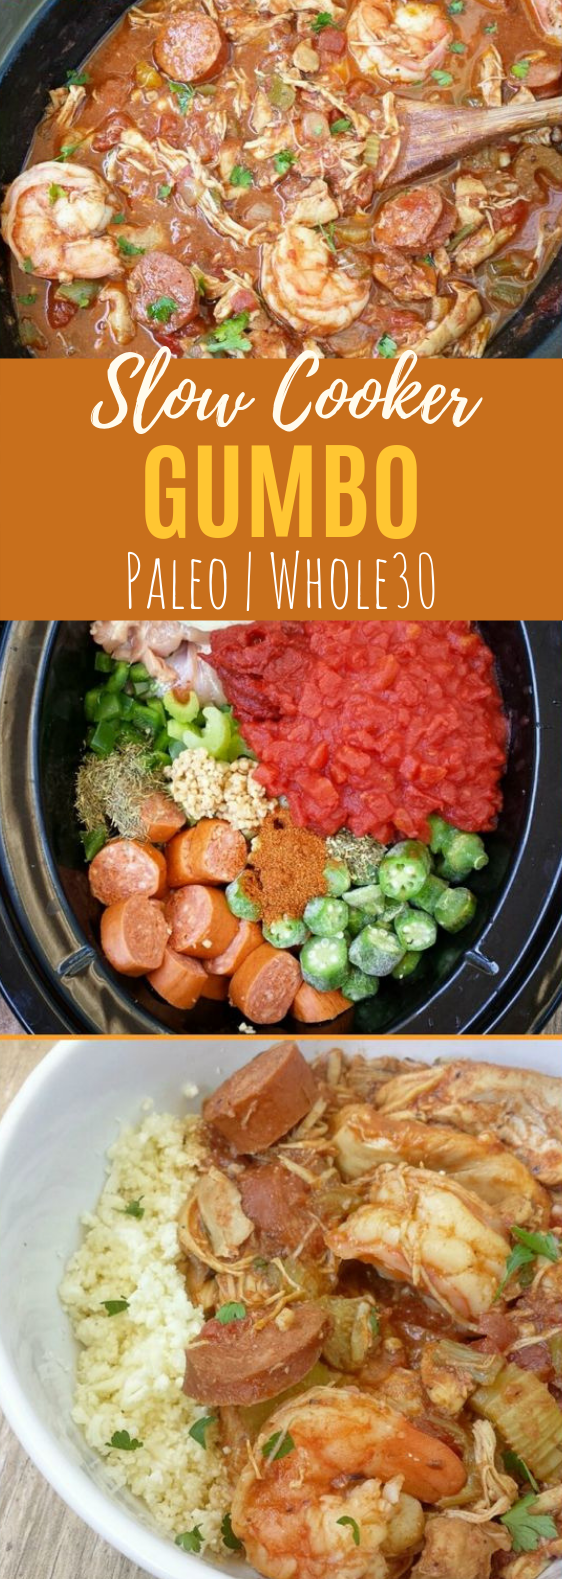 Slow Cooker Gumbo #Whole30 #Paleo